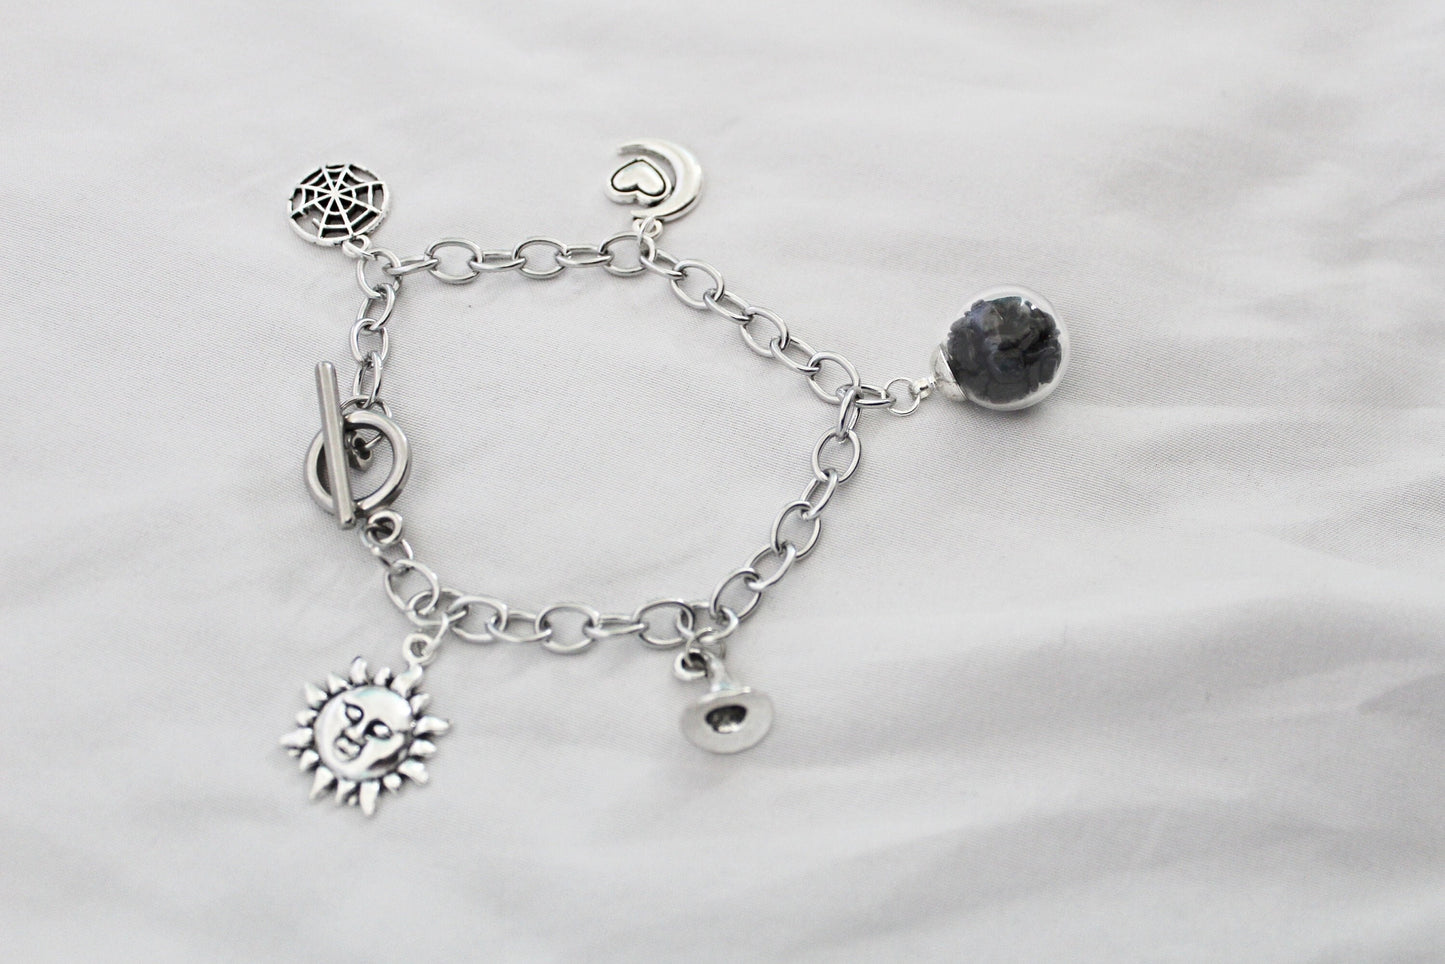 Witch Charm Bracelet Featuring Black Tourmaline - Wildflower Moon Magic